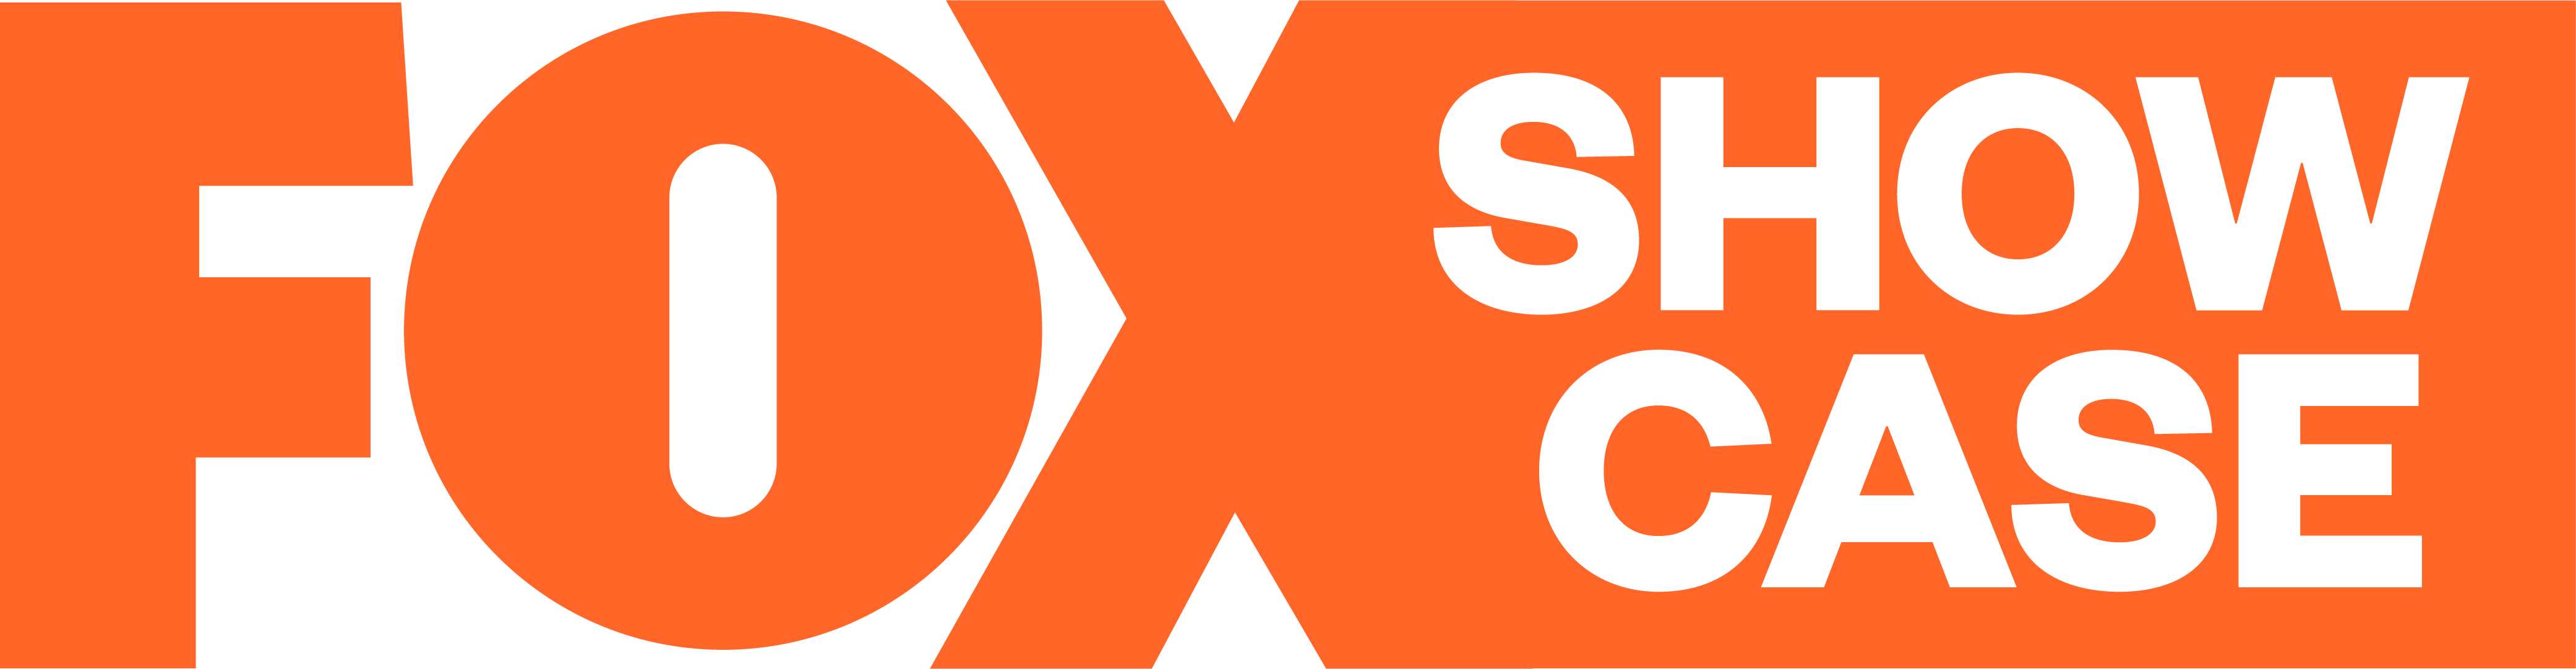 Fox Showcase logo